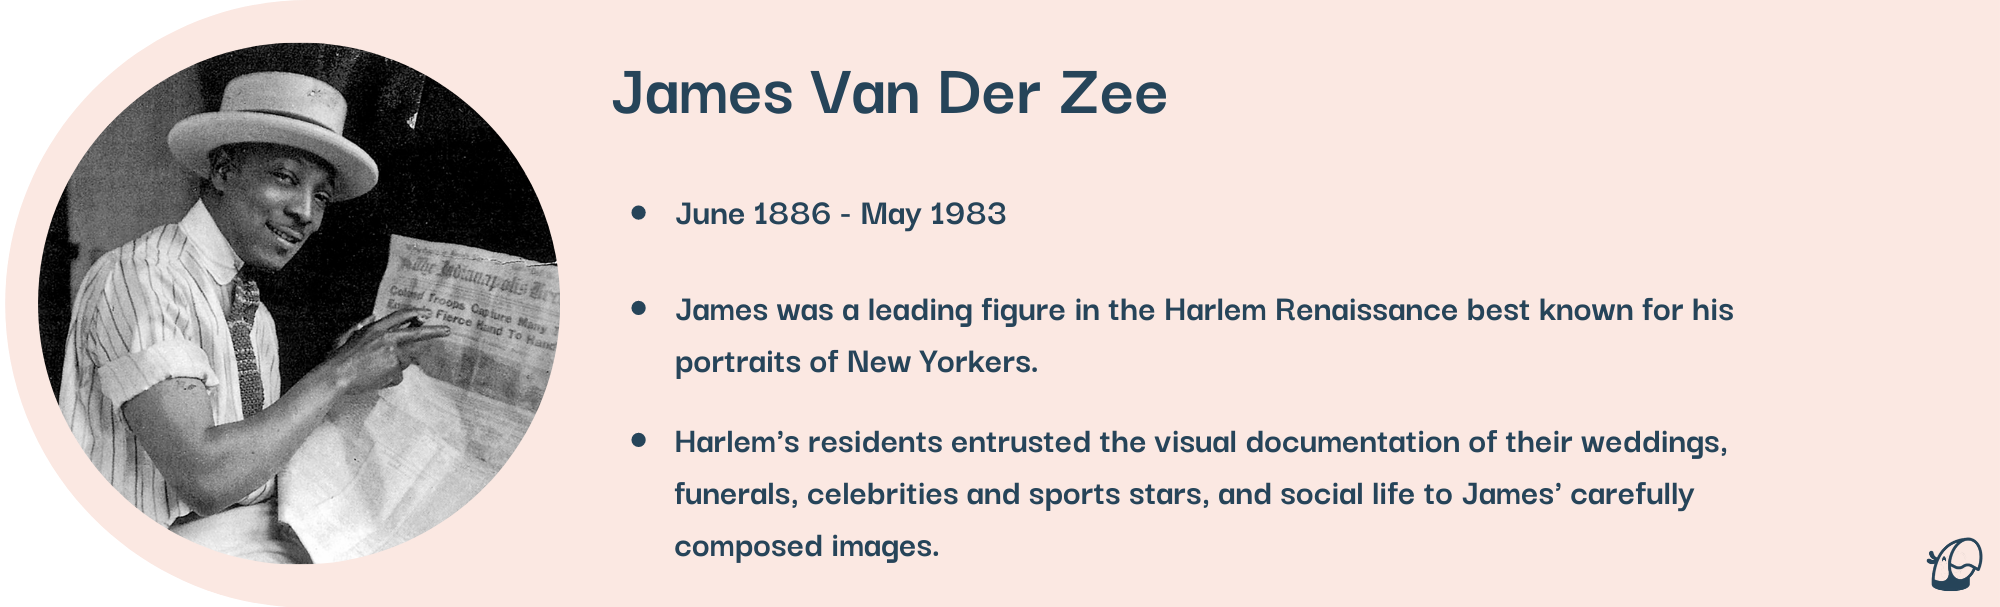 James Van Der Zee Black History Month Information